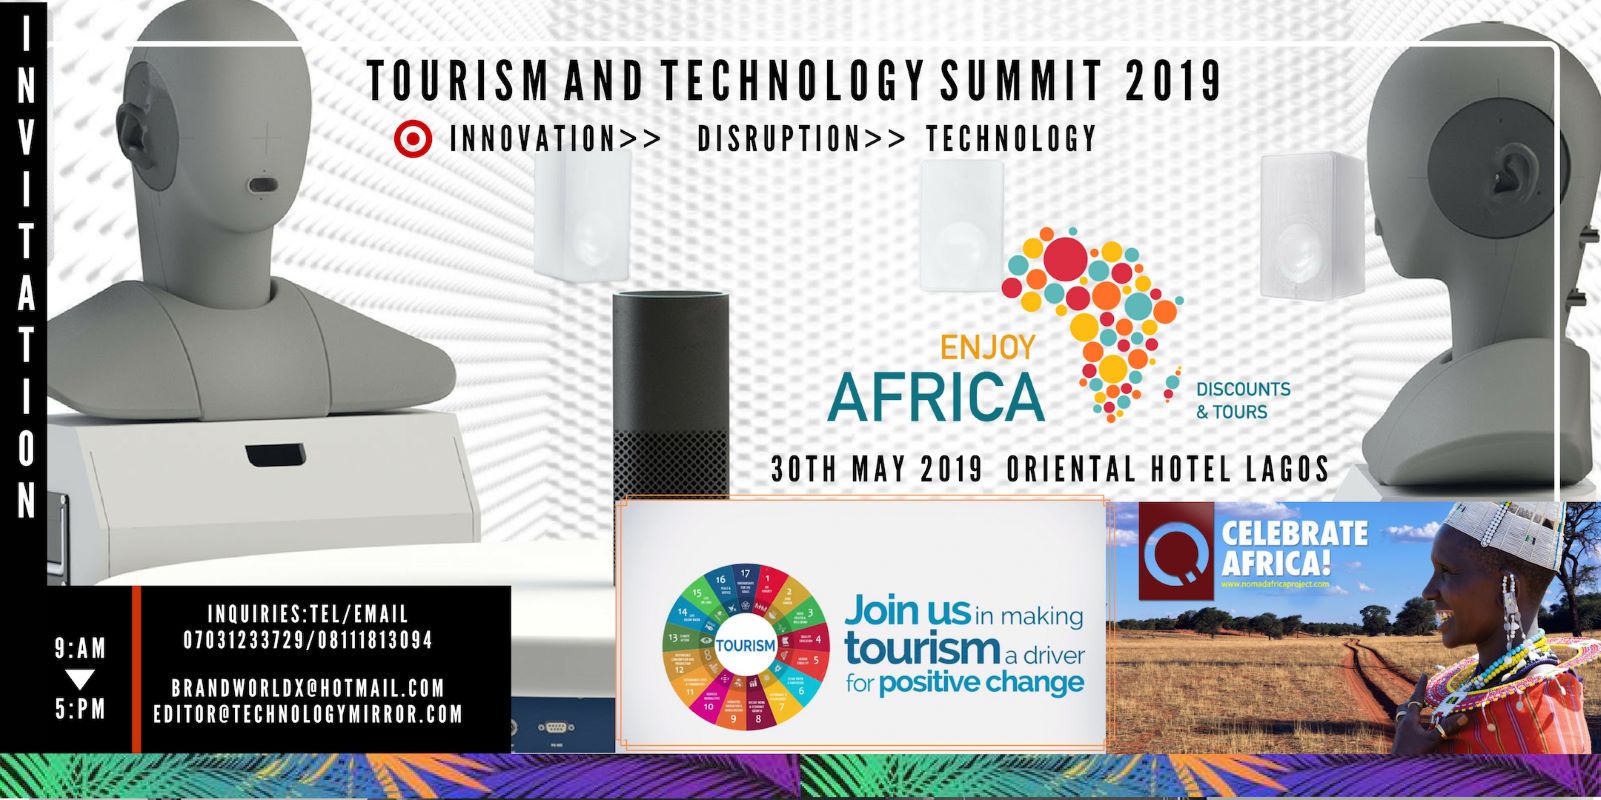 TOURISM AND TECHNOLOGY SUMMIT 2019, Lagos, Nigeria